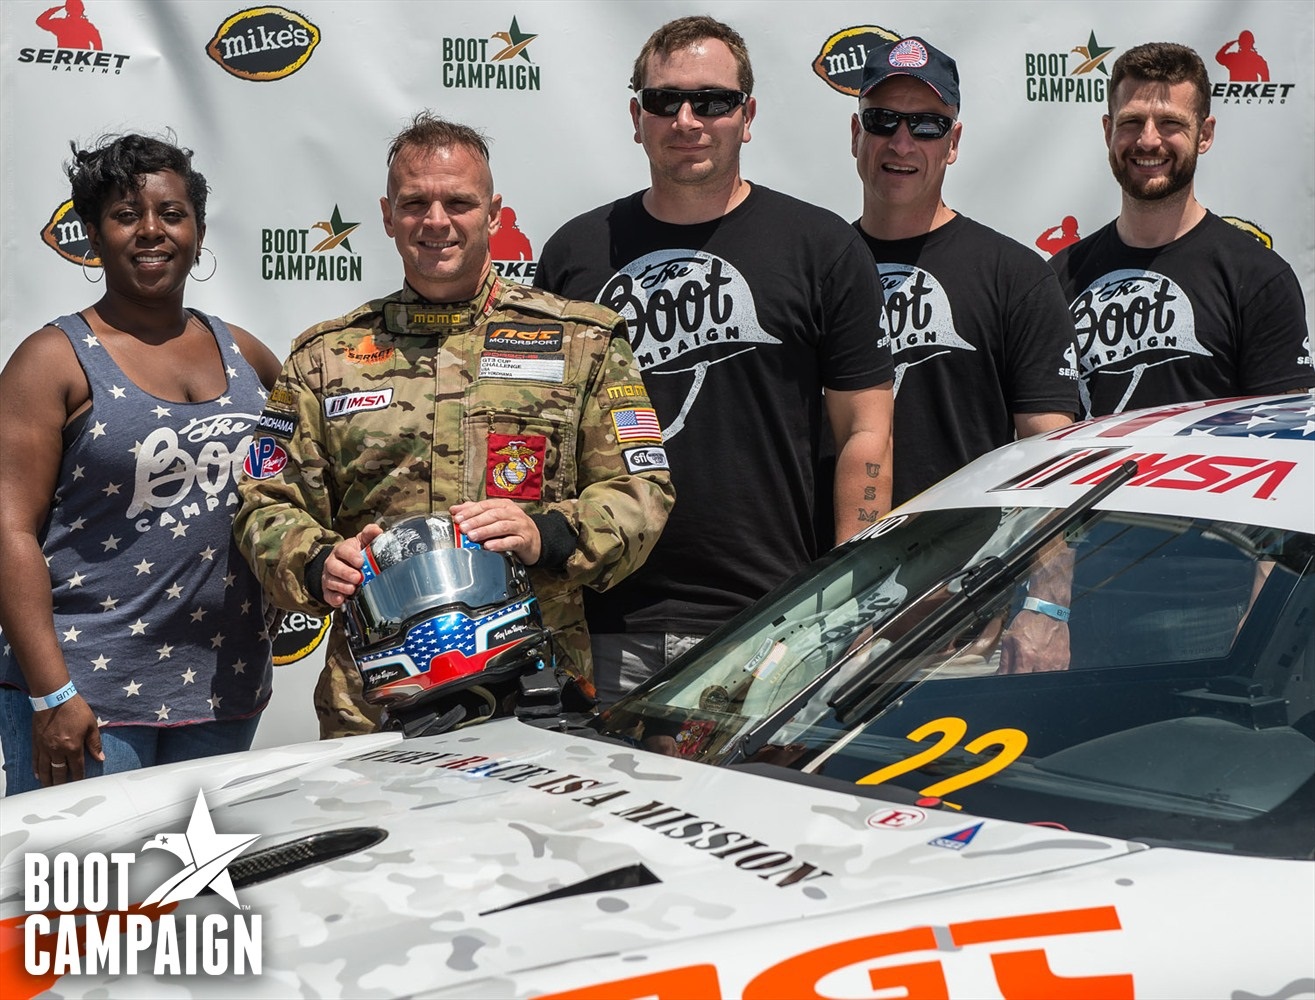 Mark Llano and Boot Campaign team up to host veterans at Serket Racing Porsche race at Watkins Glen